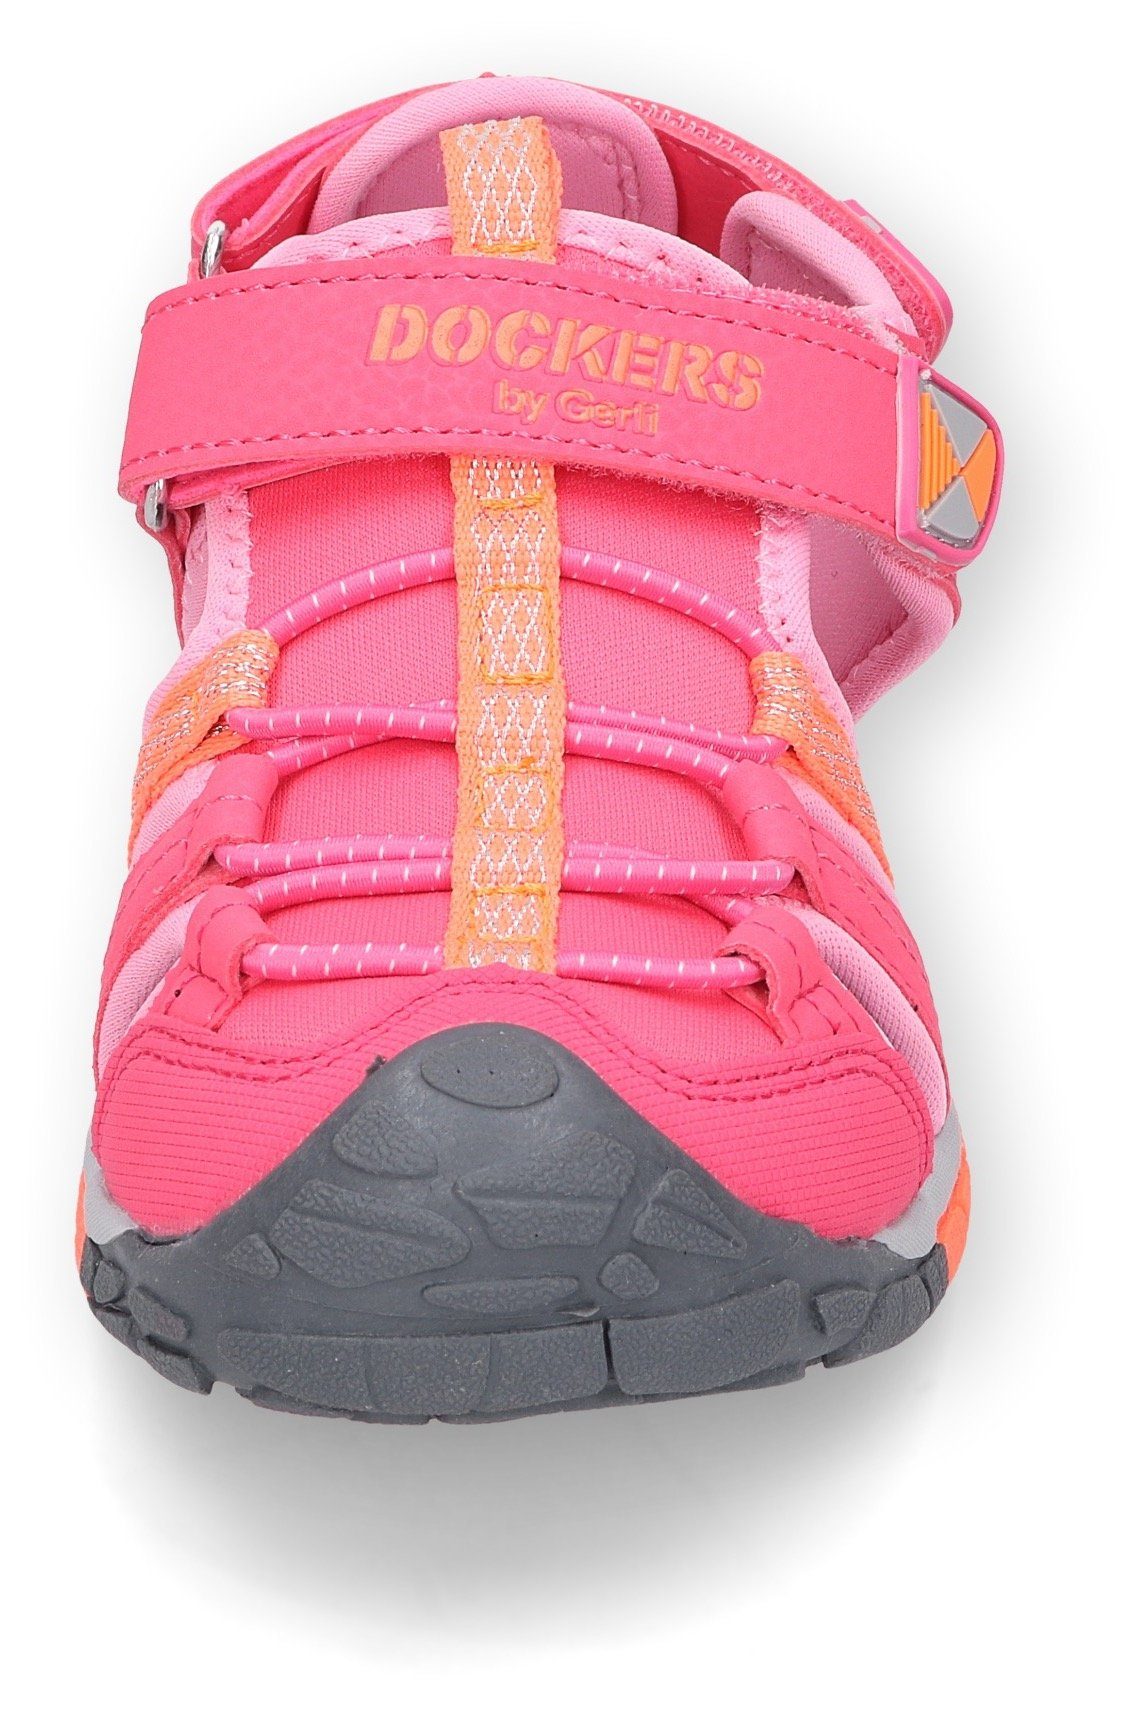 Dockers by Gerli Details Riemchensandale pink-rosa kontrastfarbenen mit